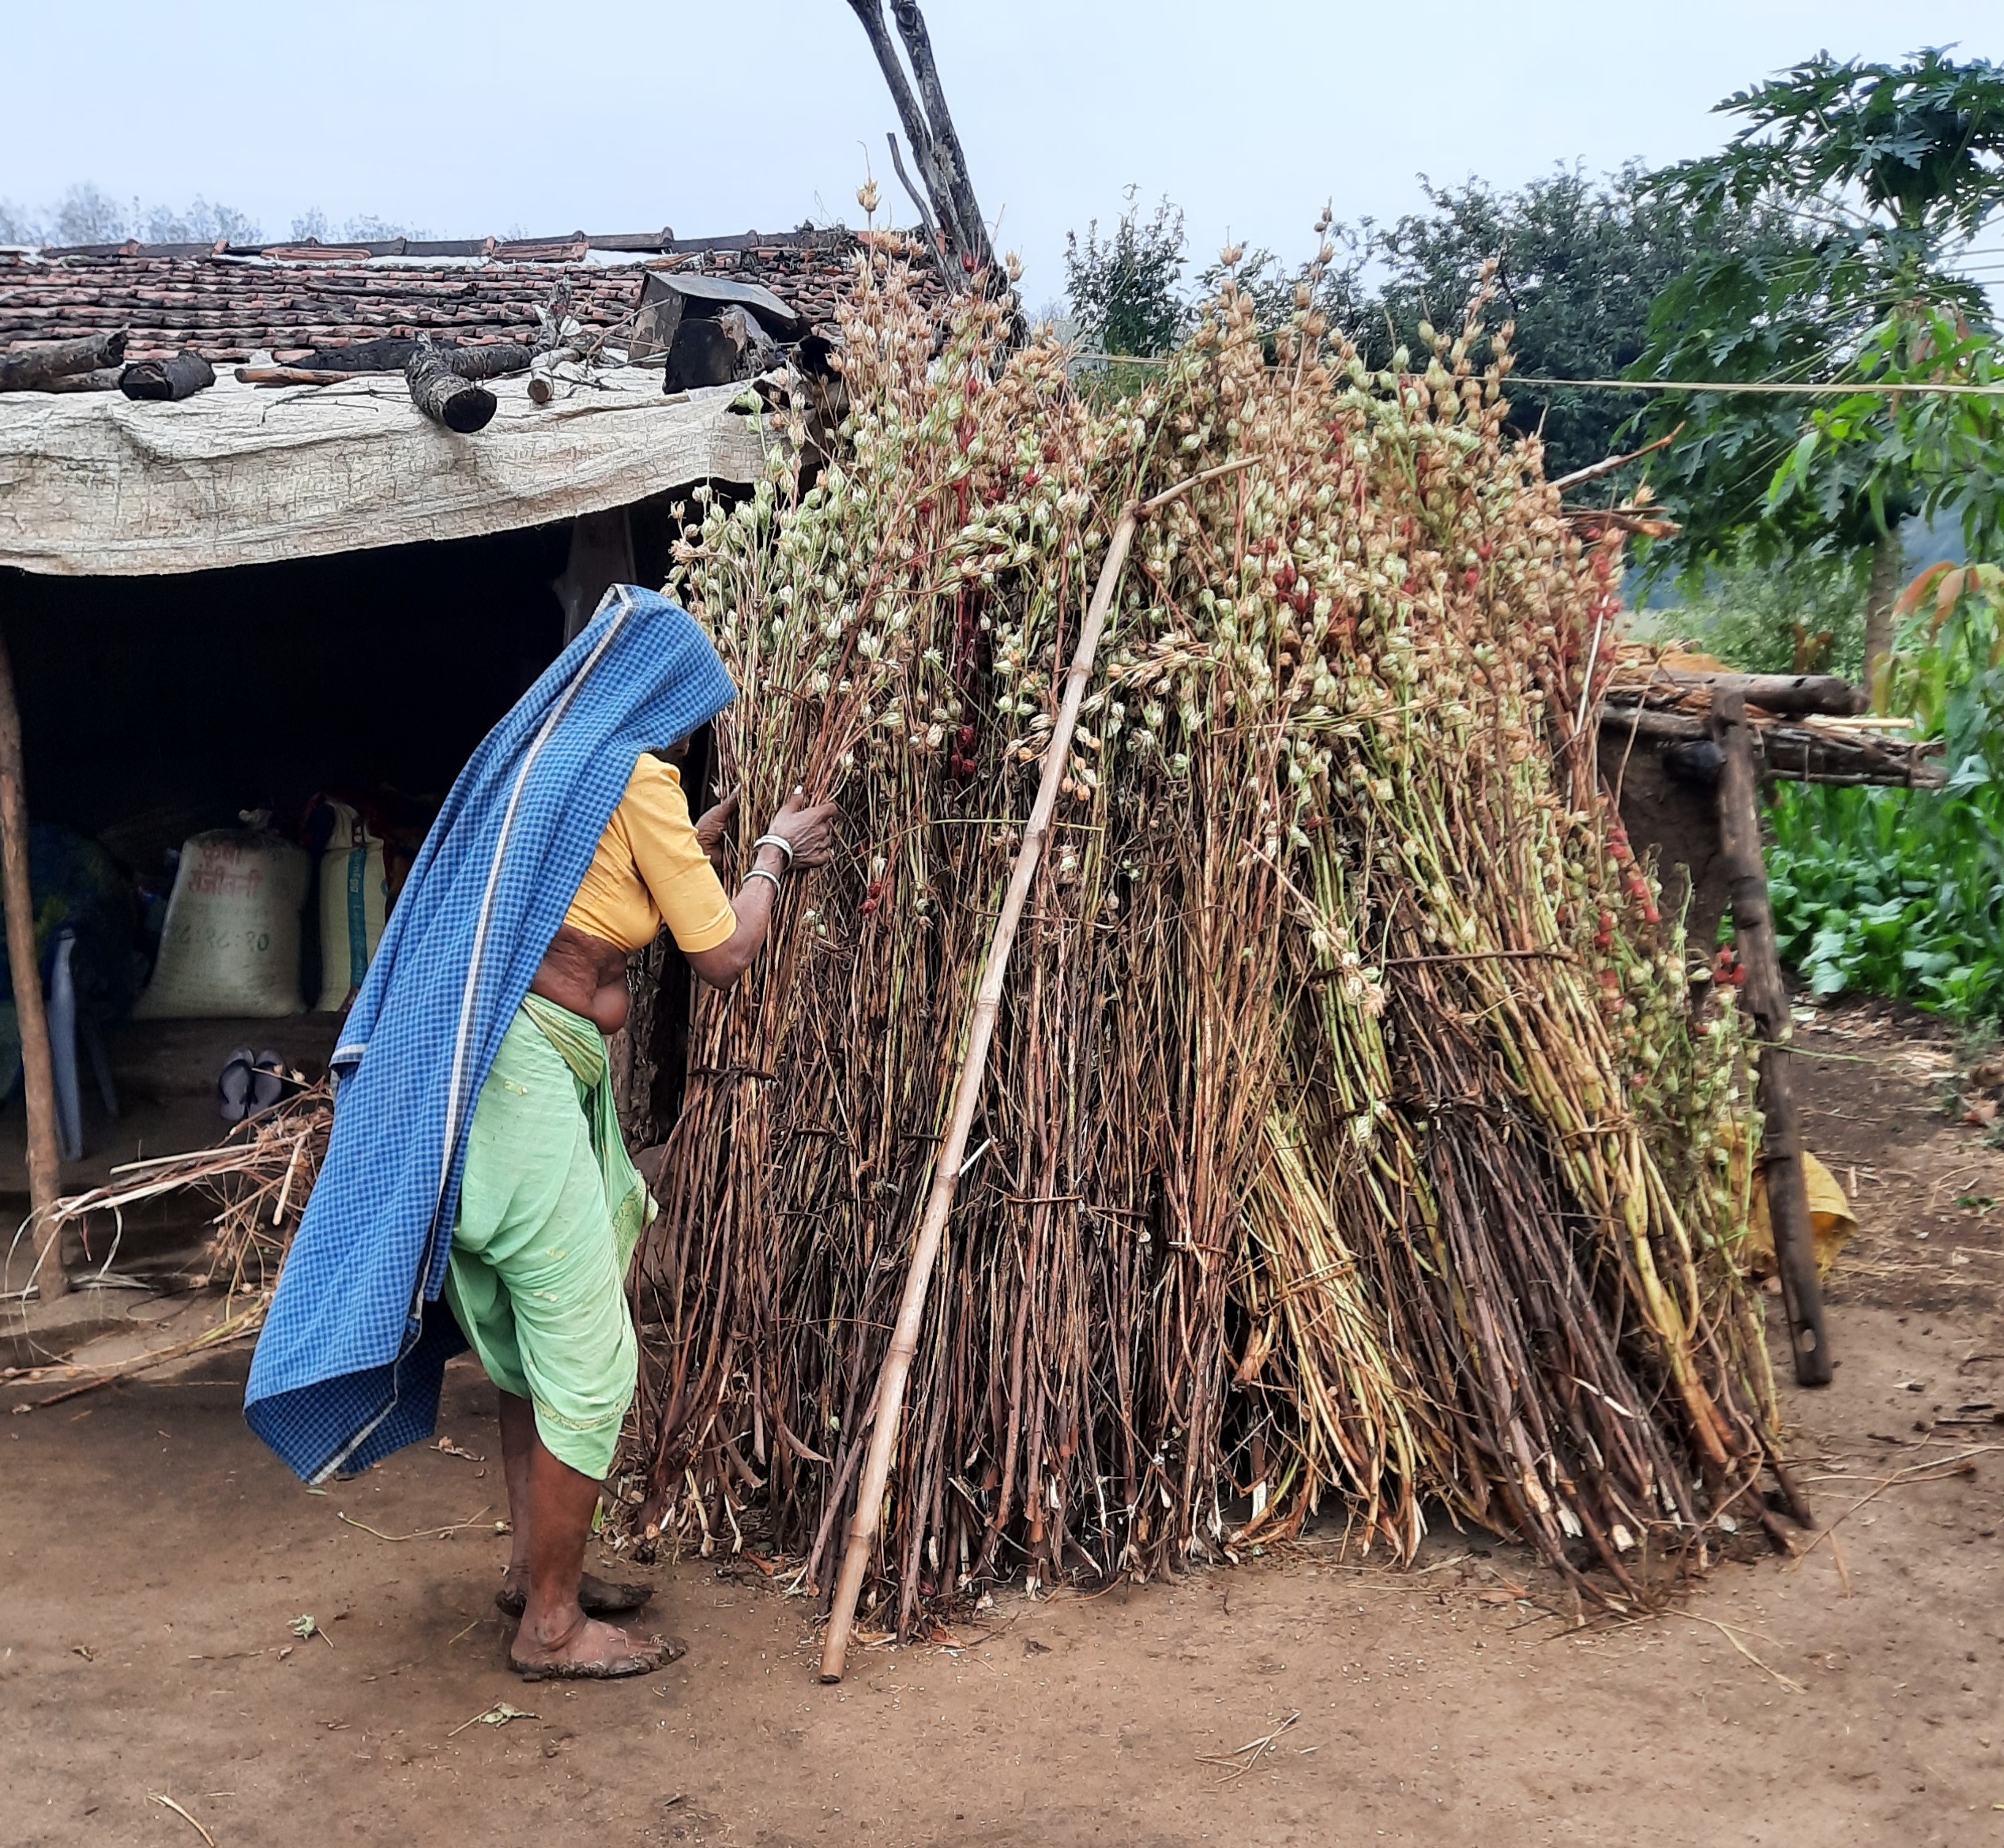 A village woman working